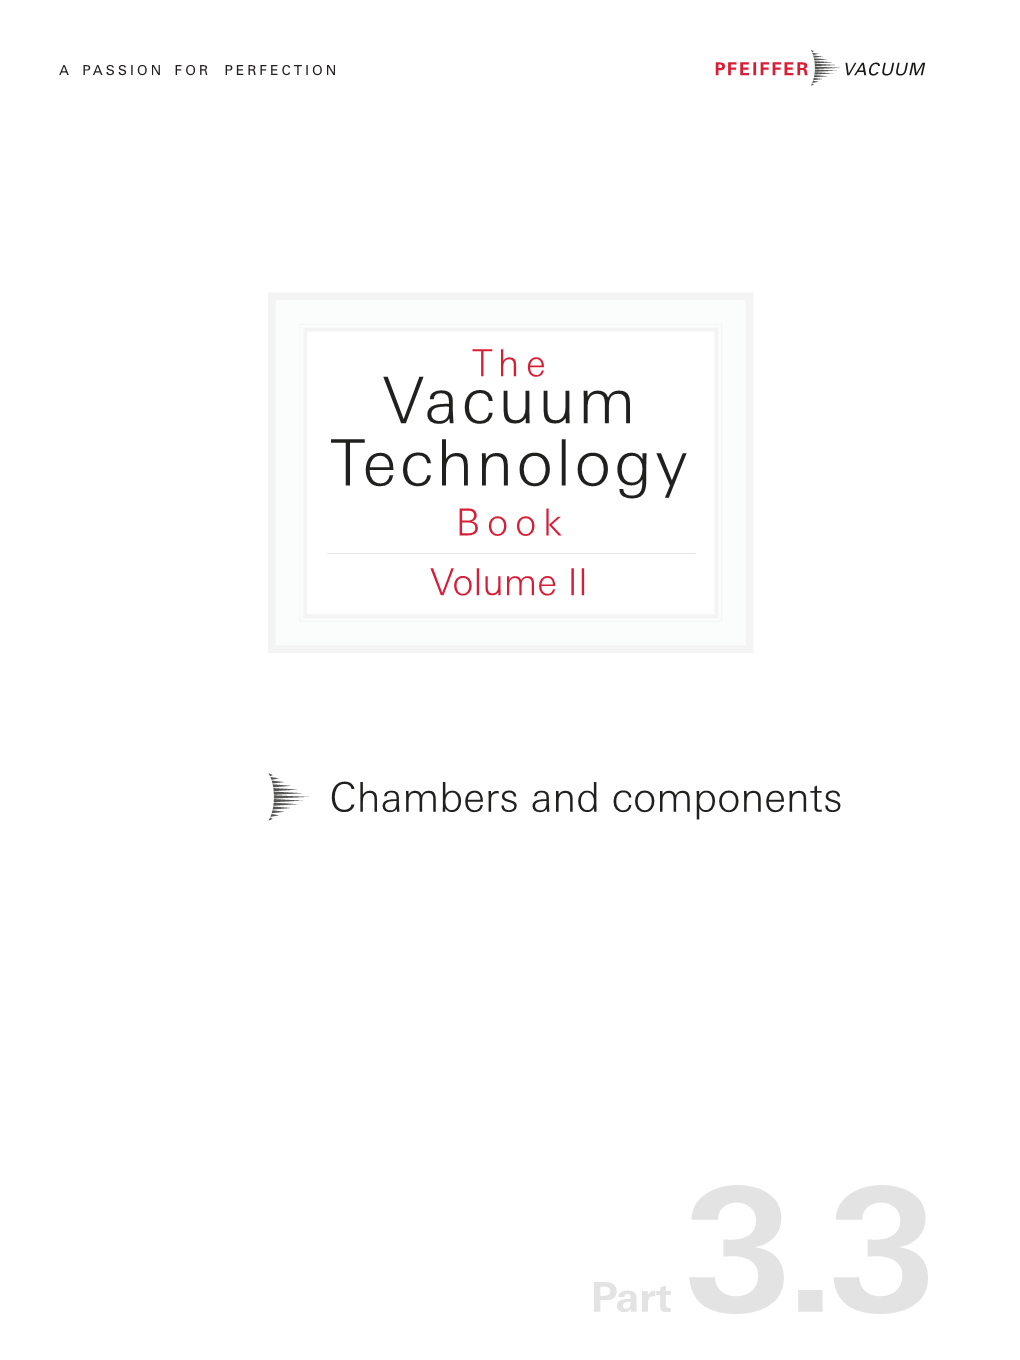 Vacuum Technology Book Volume II